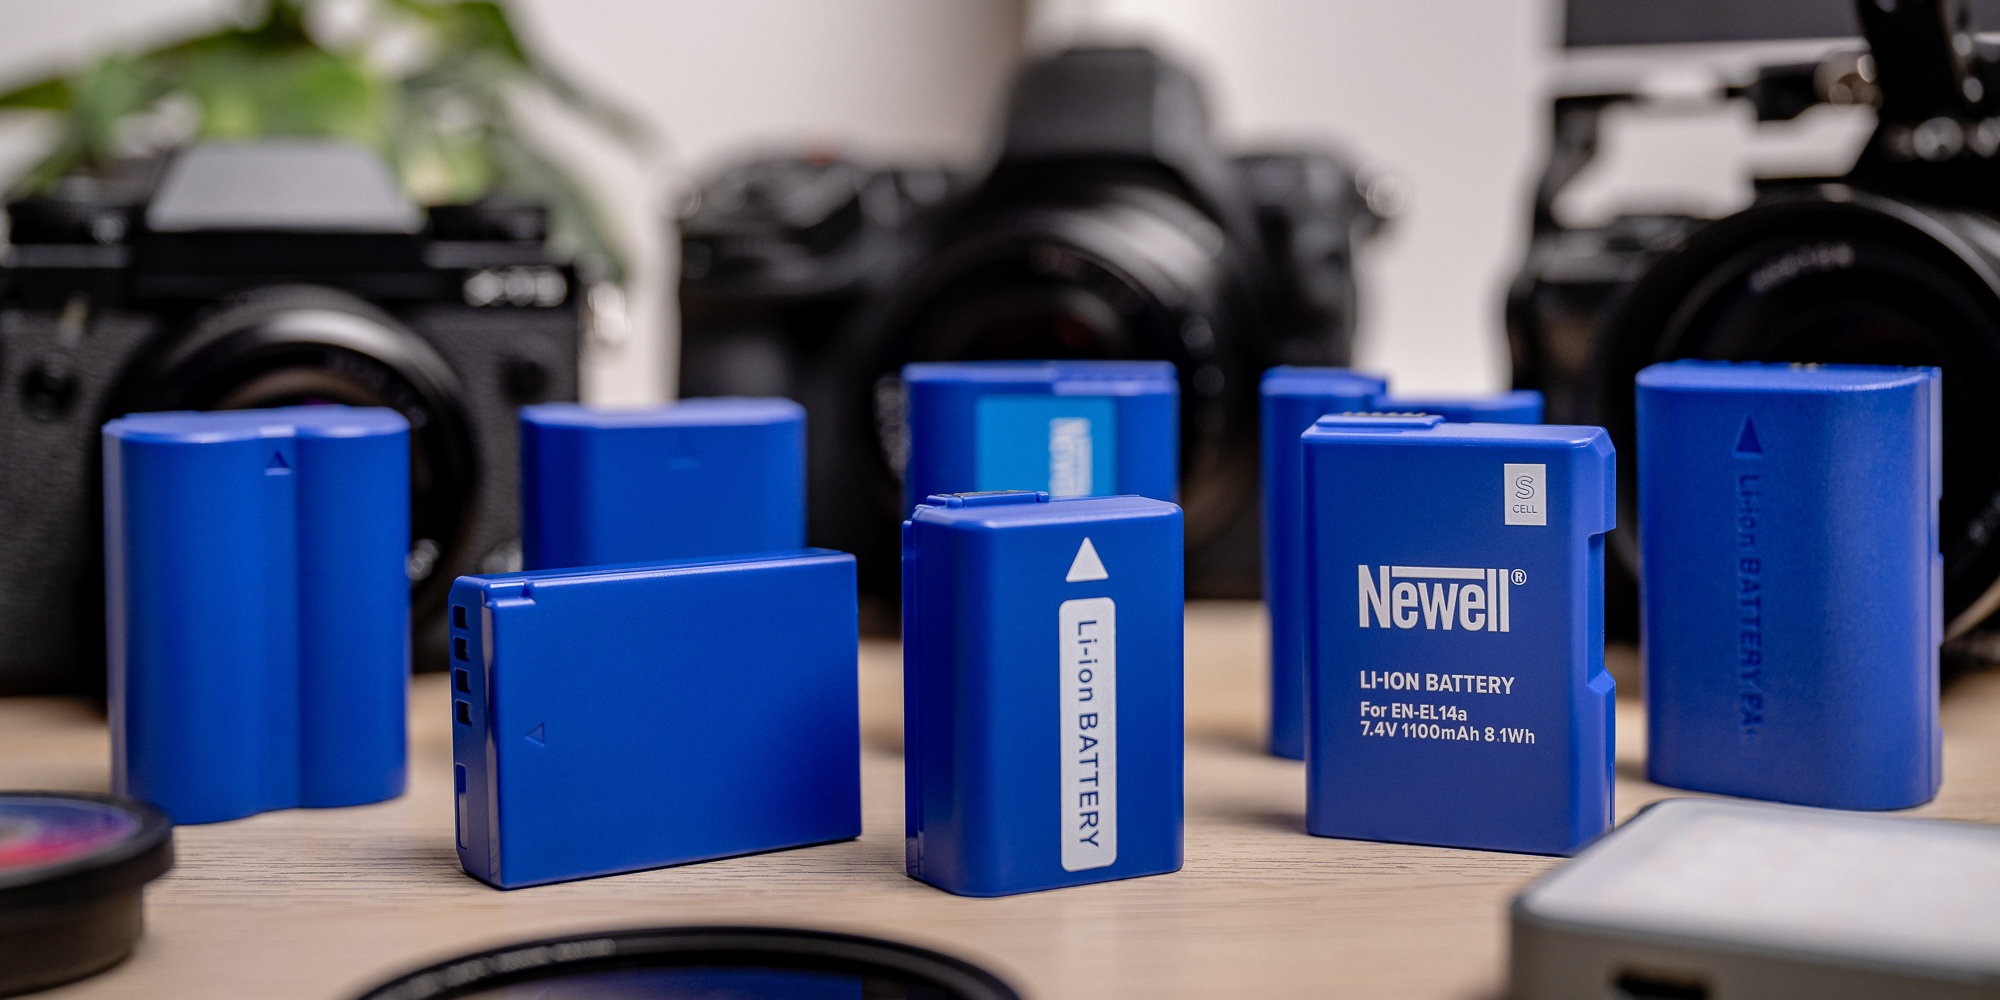 Newell SupraCell Protect NP-F970 vervangende batterij voor Sony